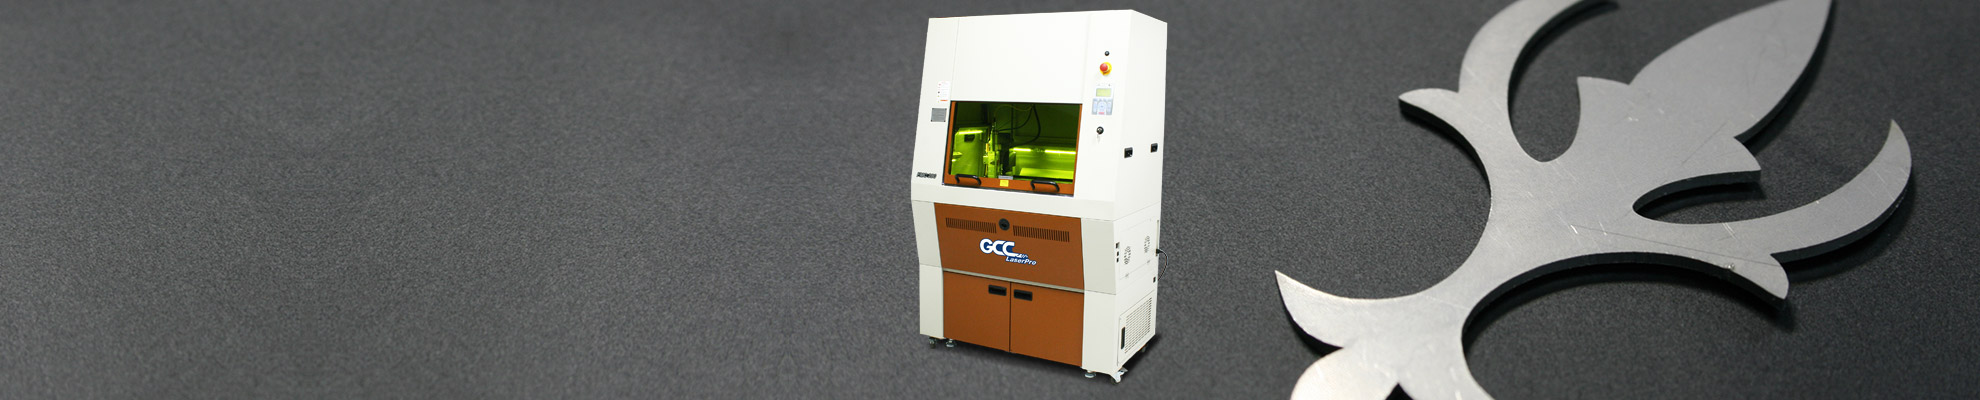 FMC-280 Fibre Metal Laser Cutting System